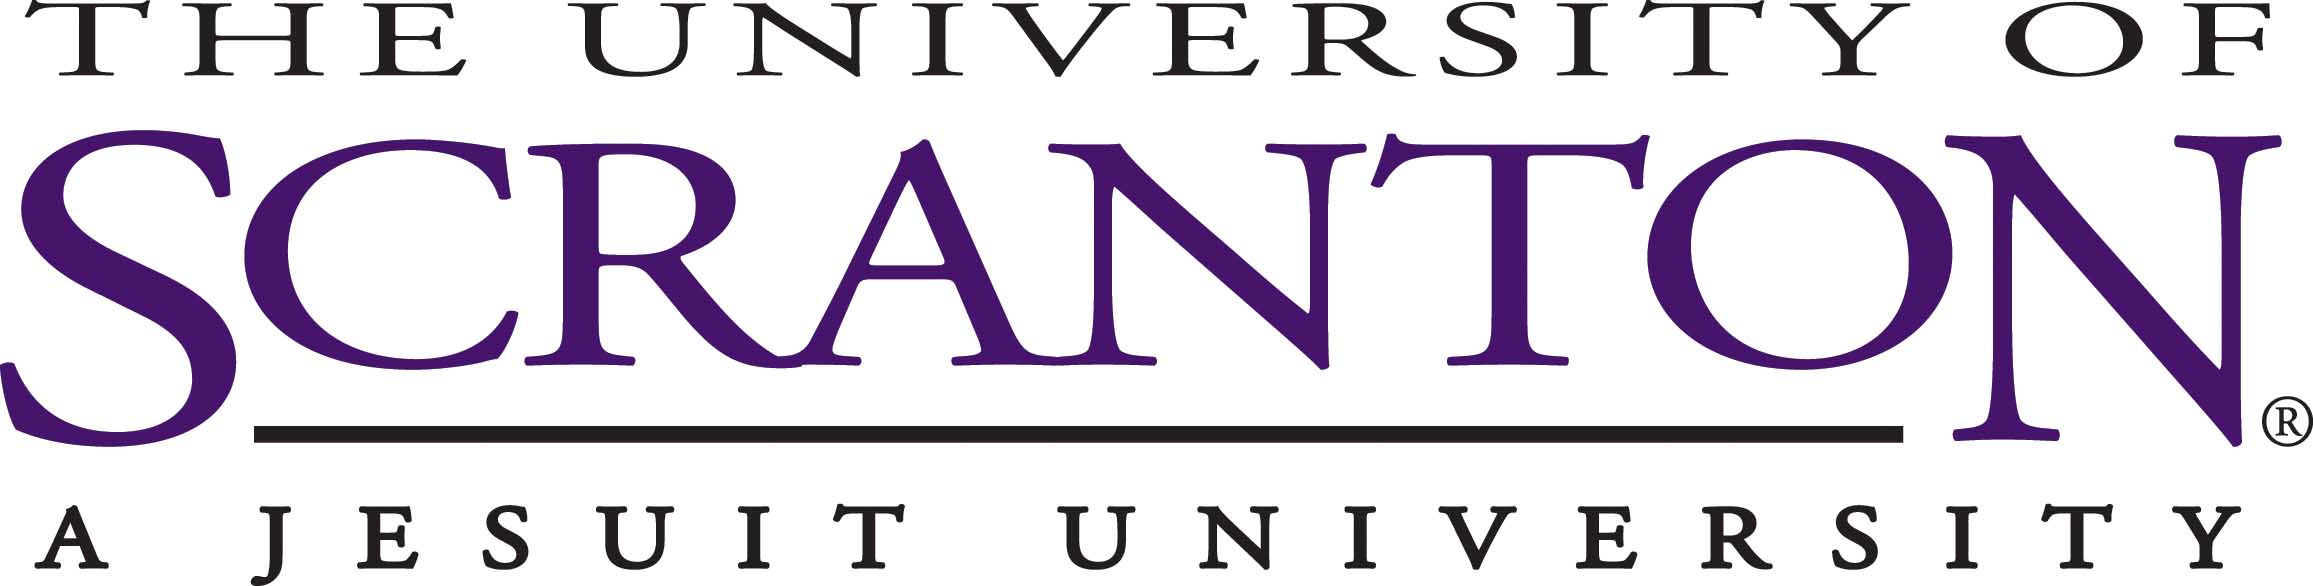 University-of-Scranton-Logo.jpg